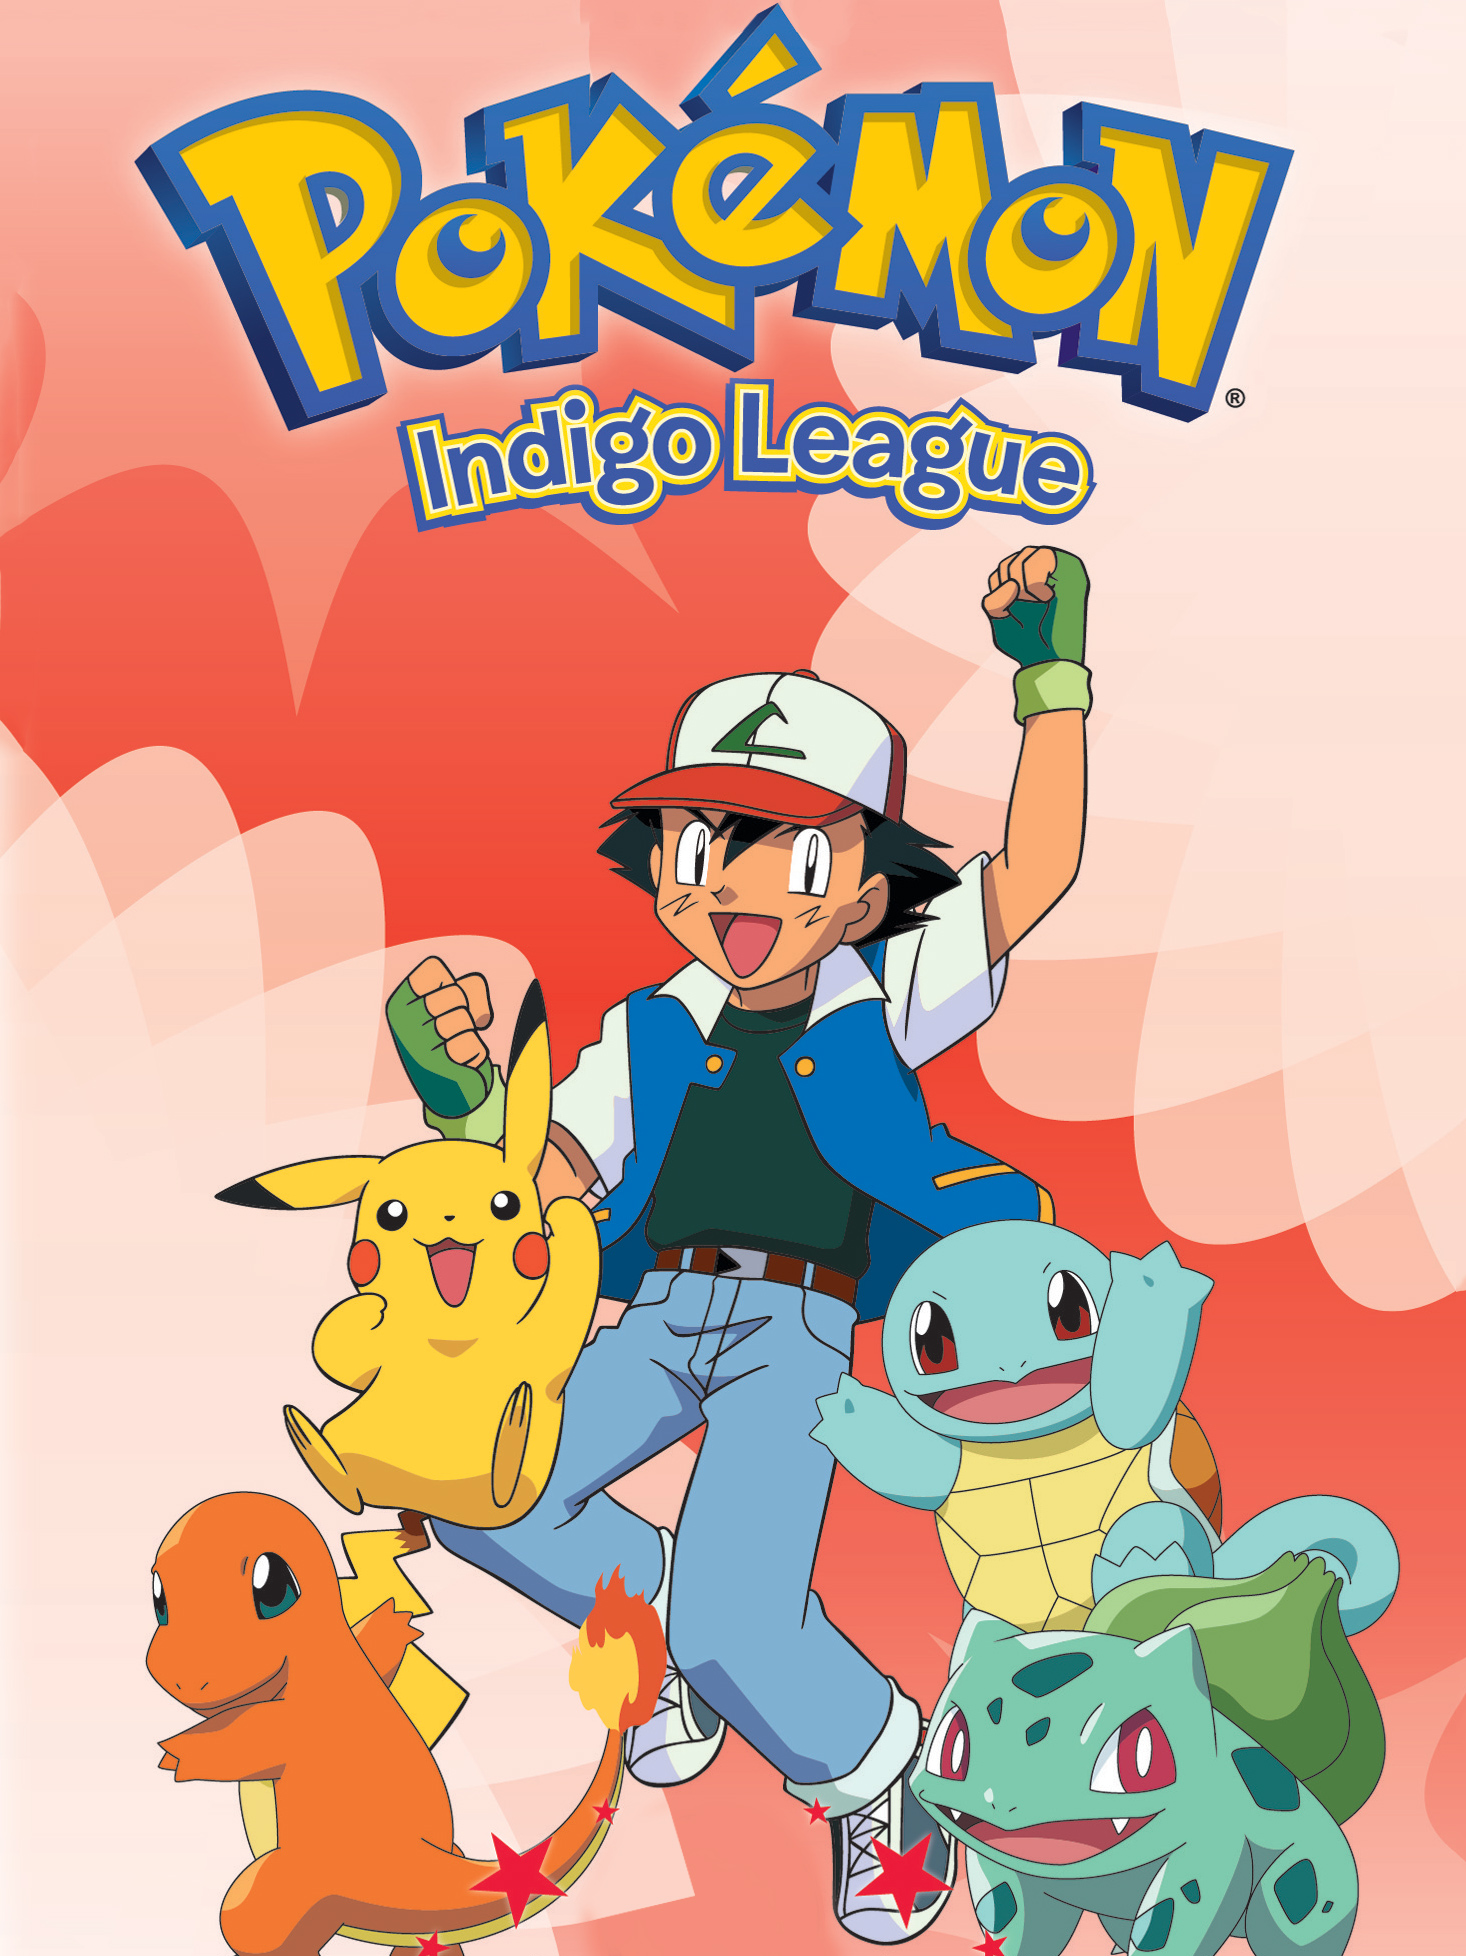 Pokémon de serie Indigo League